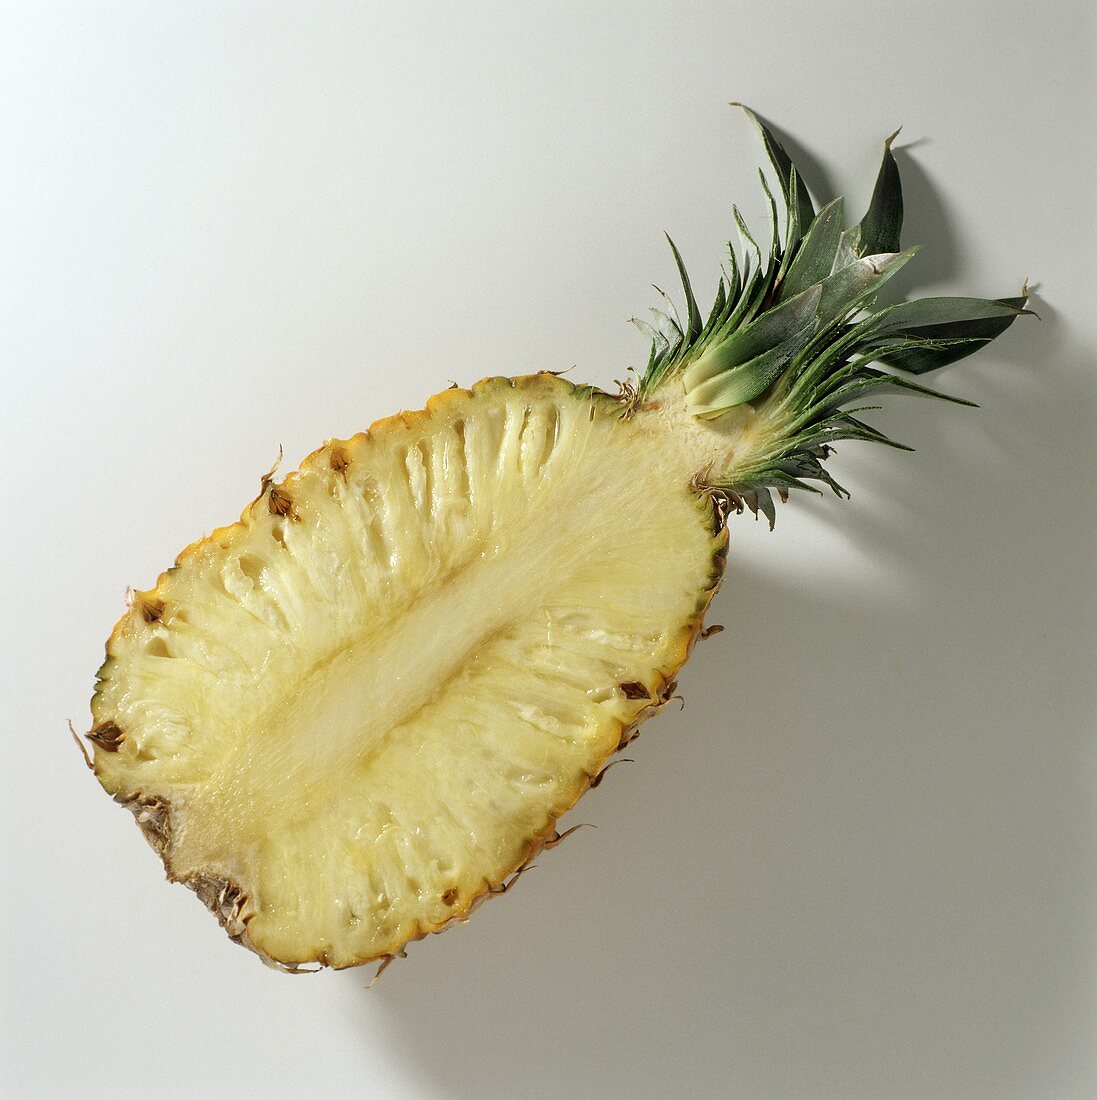 Half a pineapple